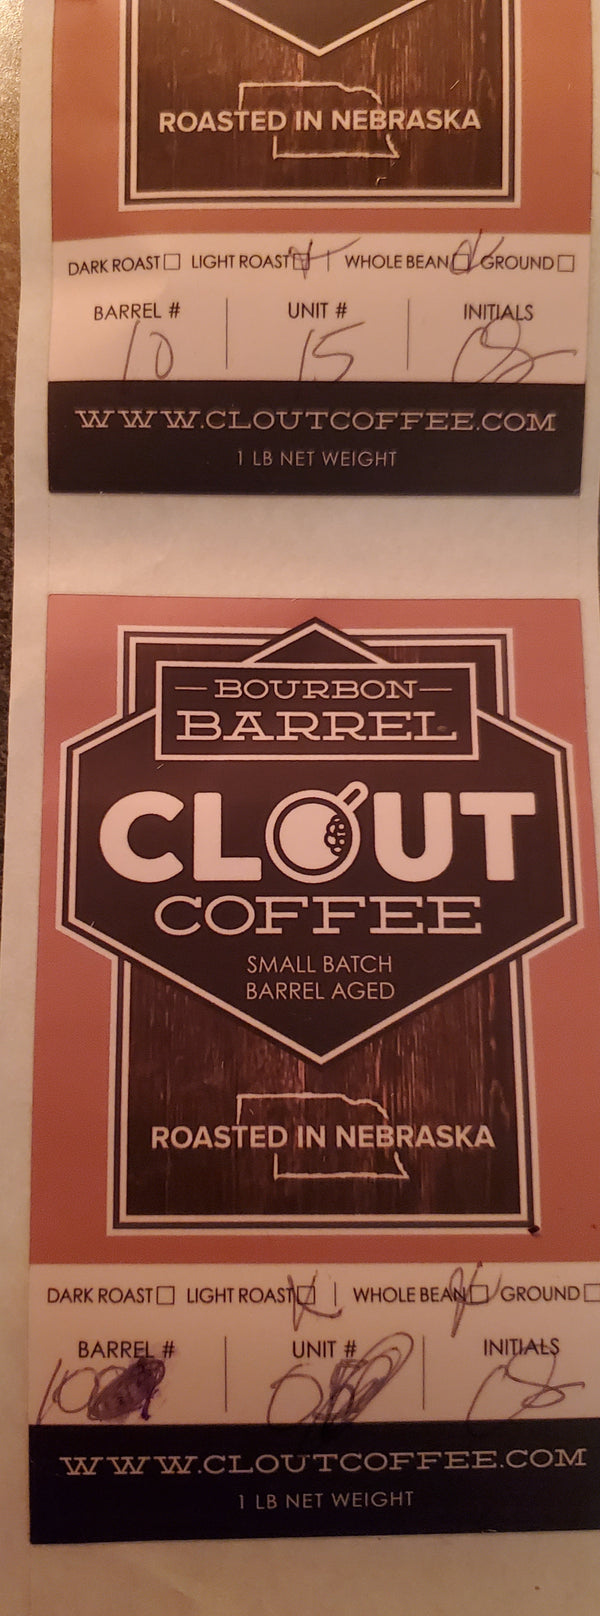 $.90 down the drain | Clout Coffee Blog